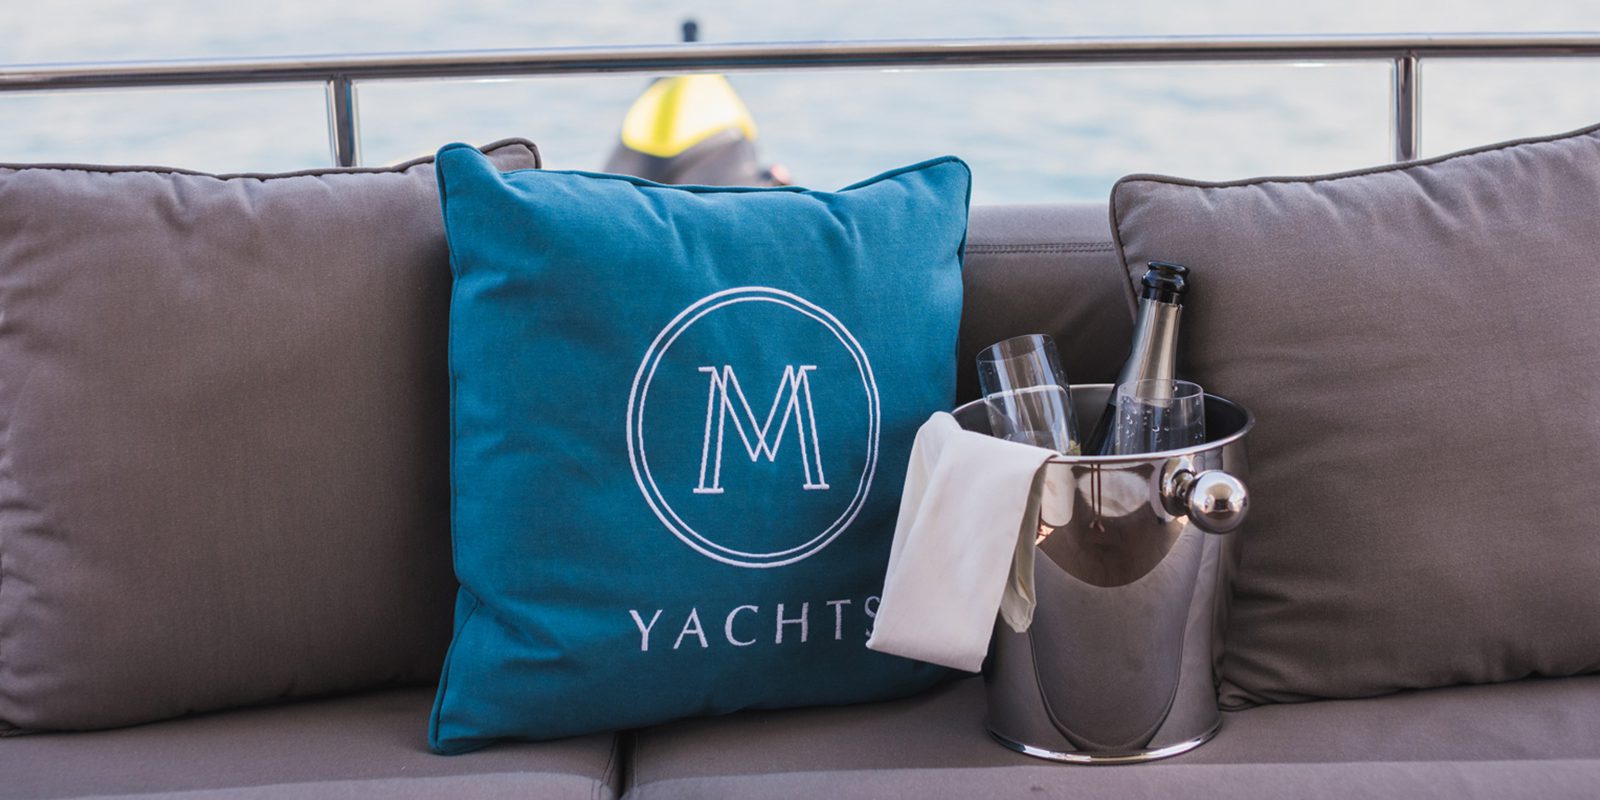 M Yachts Branding Logo On Cushion Sitting On The Boat